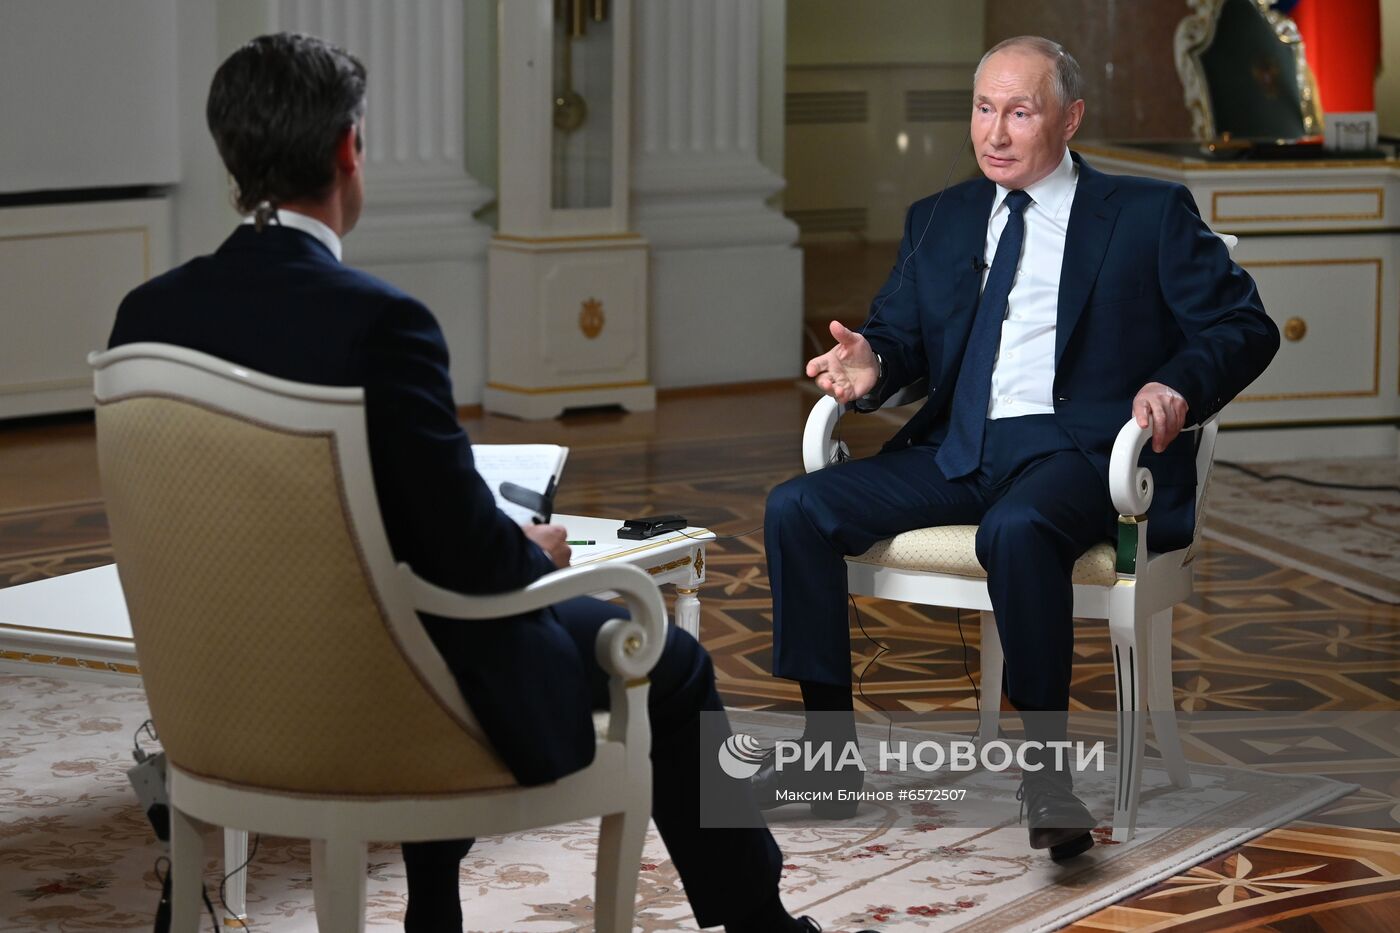 Президент РФ В. Путин дал интервью американской телекомпании NBC